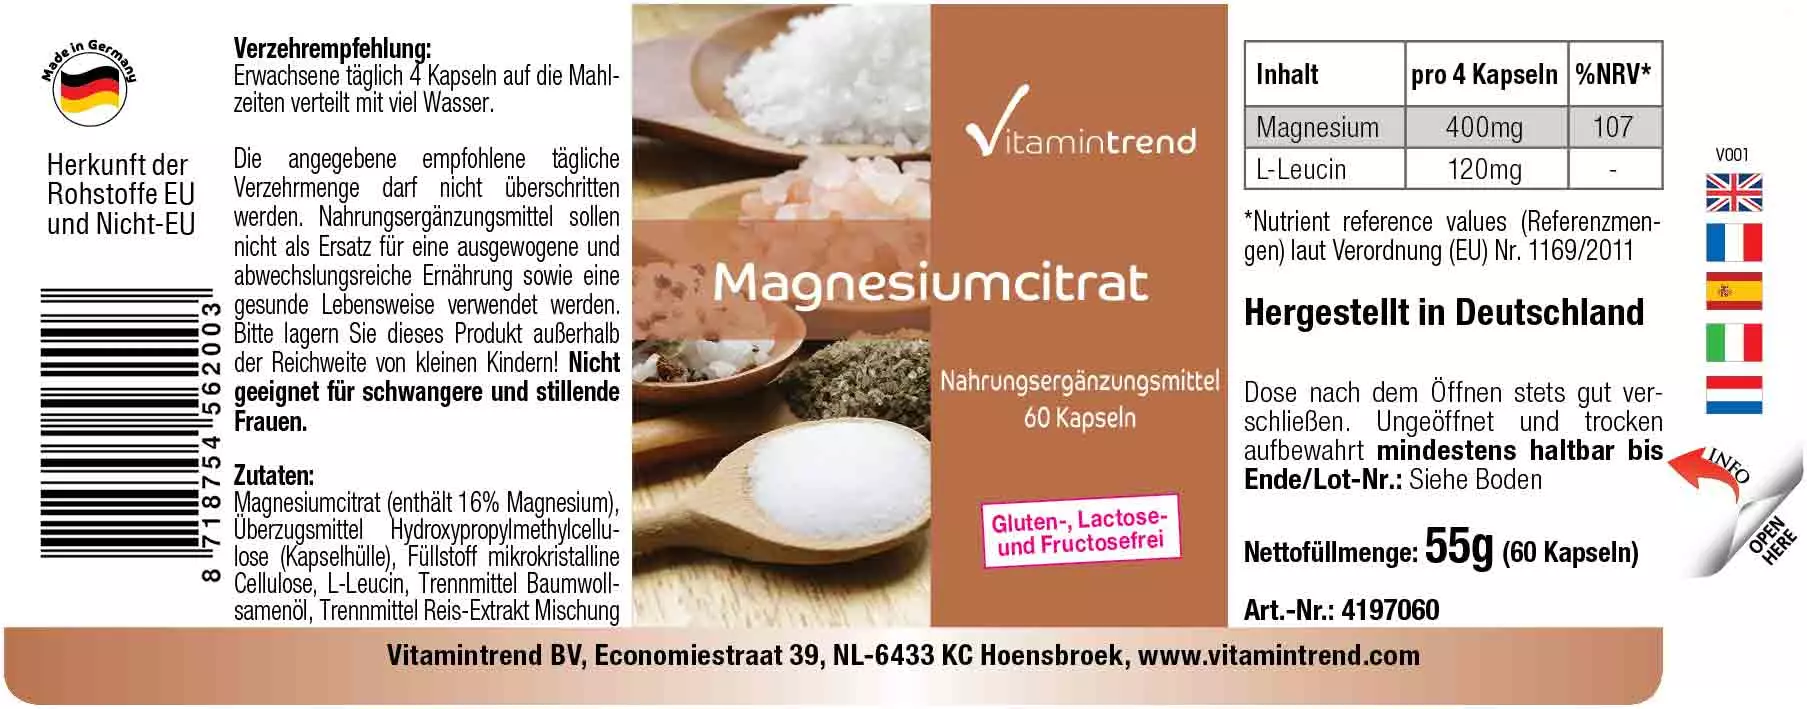 Magnesiumcitrat - 60 Kapseln - organisch gebundenes Magnesium